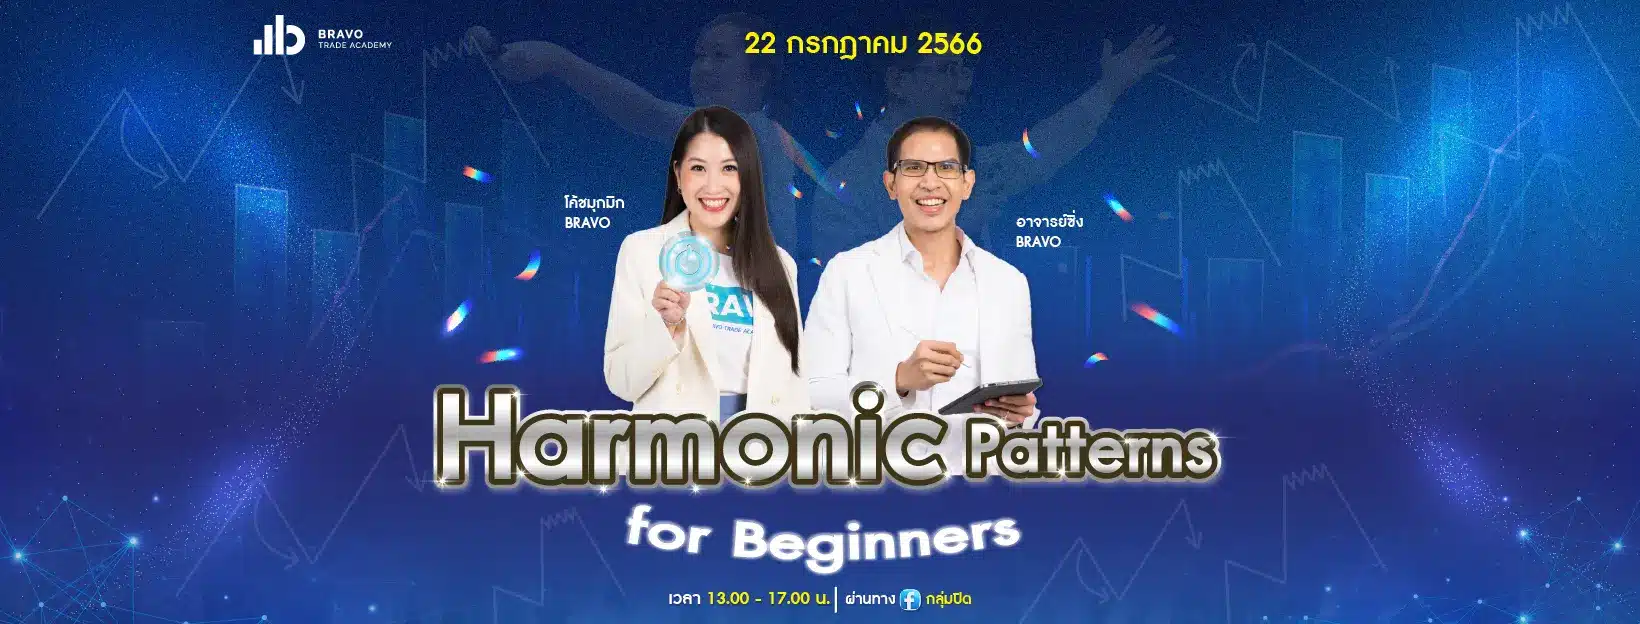 Harmonic Patterns for Beginners